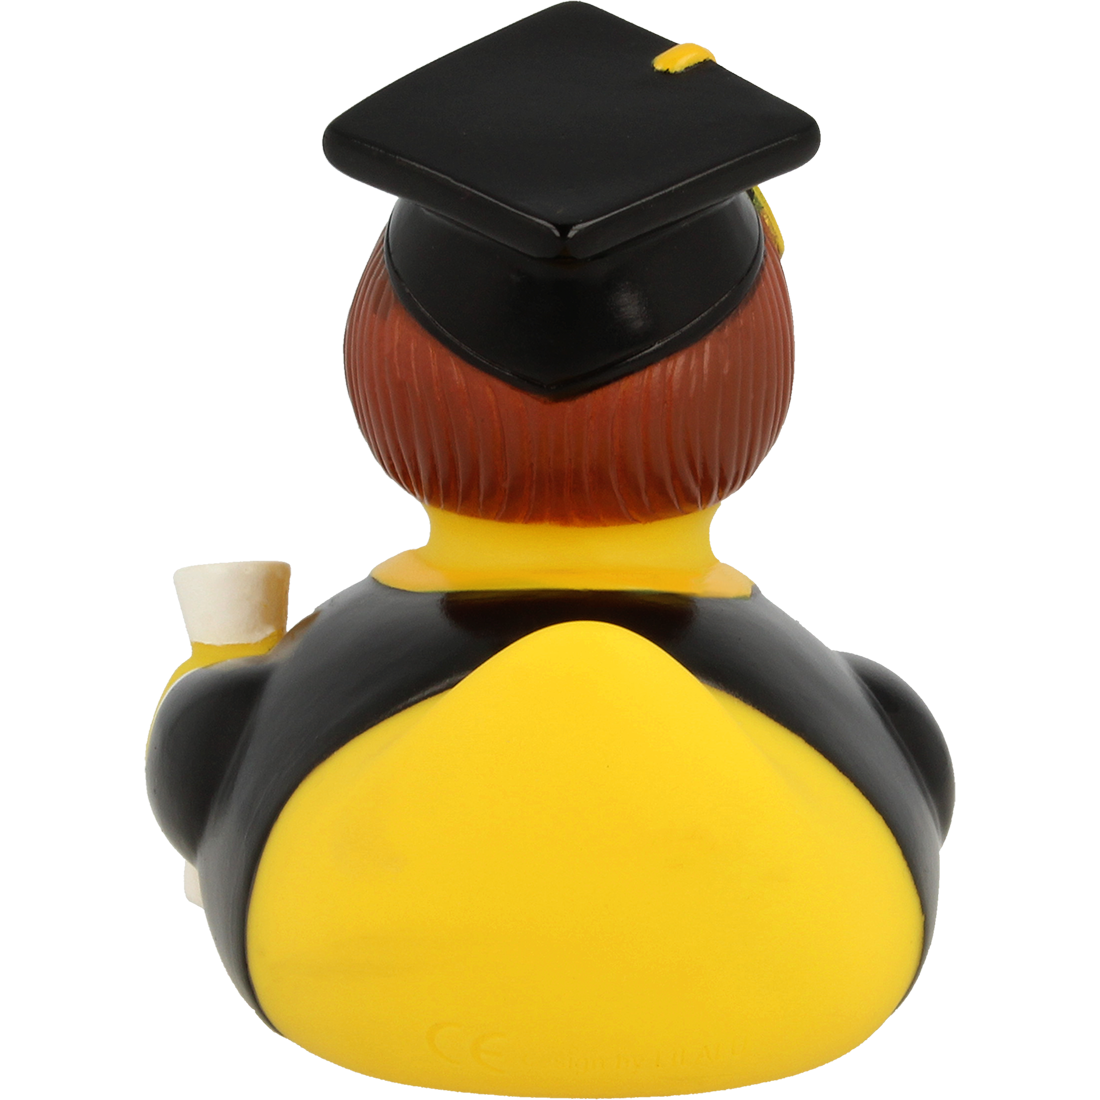 Graduate Duck